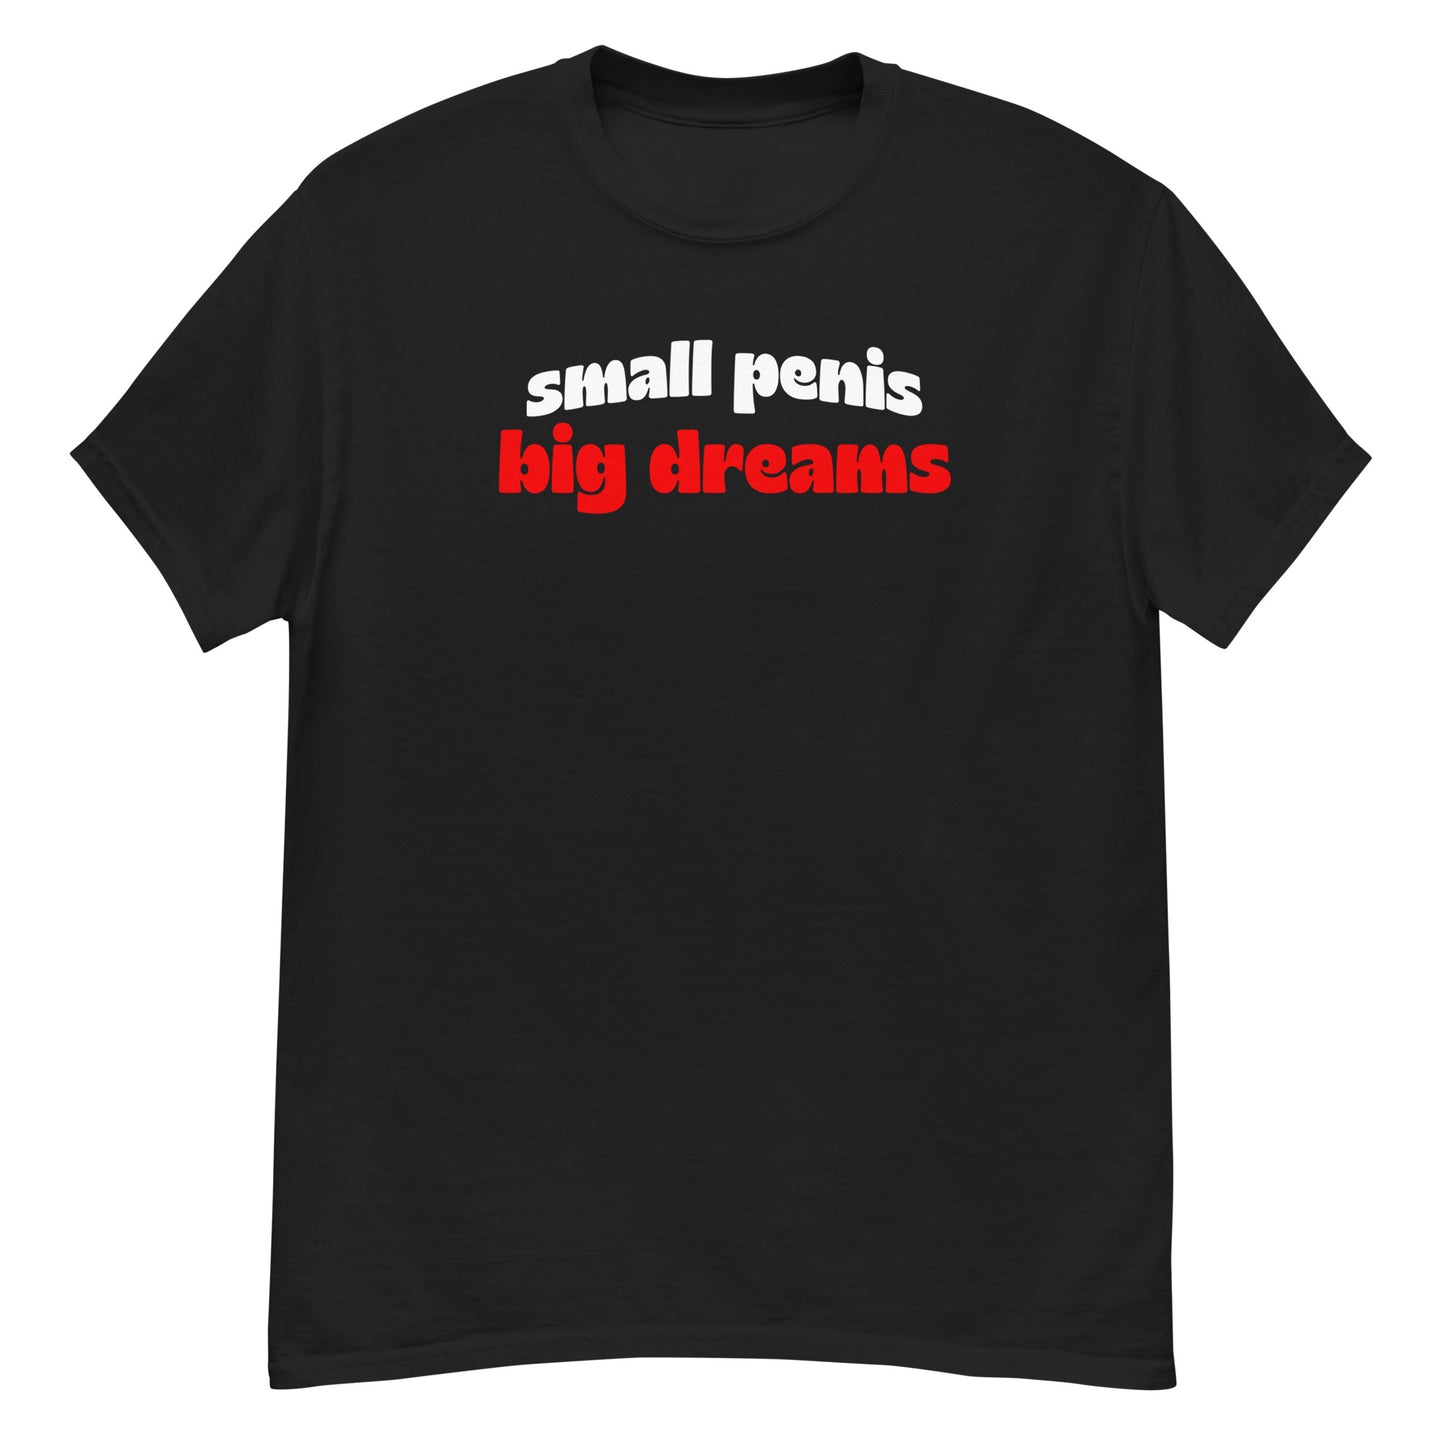 Small Peen, Big Dreams classic tee